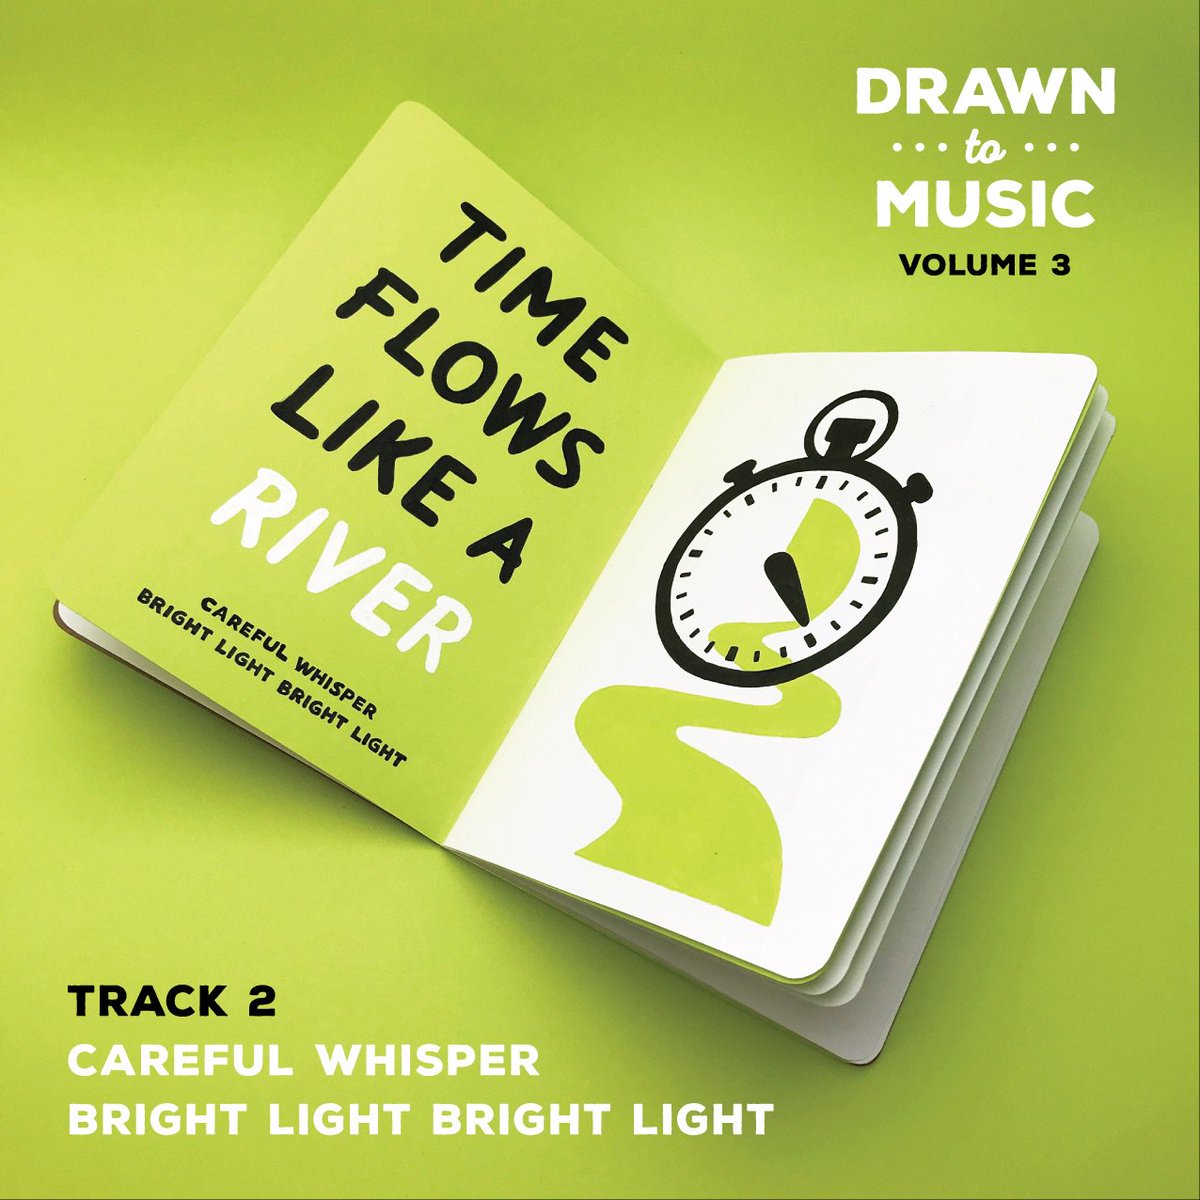 Drawn to Music - Volume 3 : Track 2 - Careful Whisper by Bright Light Bright Light 
#sketchbookproject2019 #drawntomusicvol3 #S218500 #blackwhiteandgreen #carefulwhisper #brightlightbrightlight